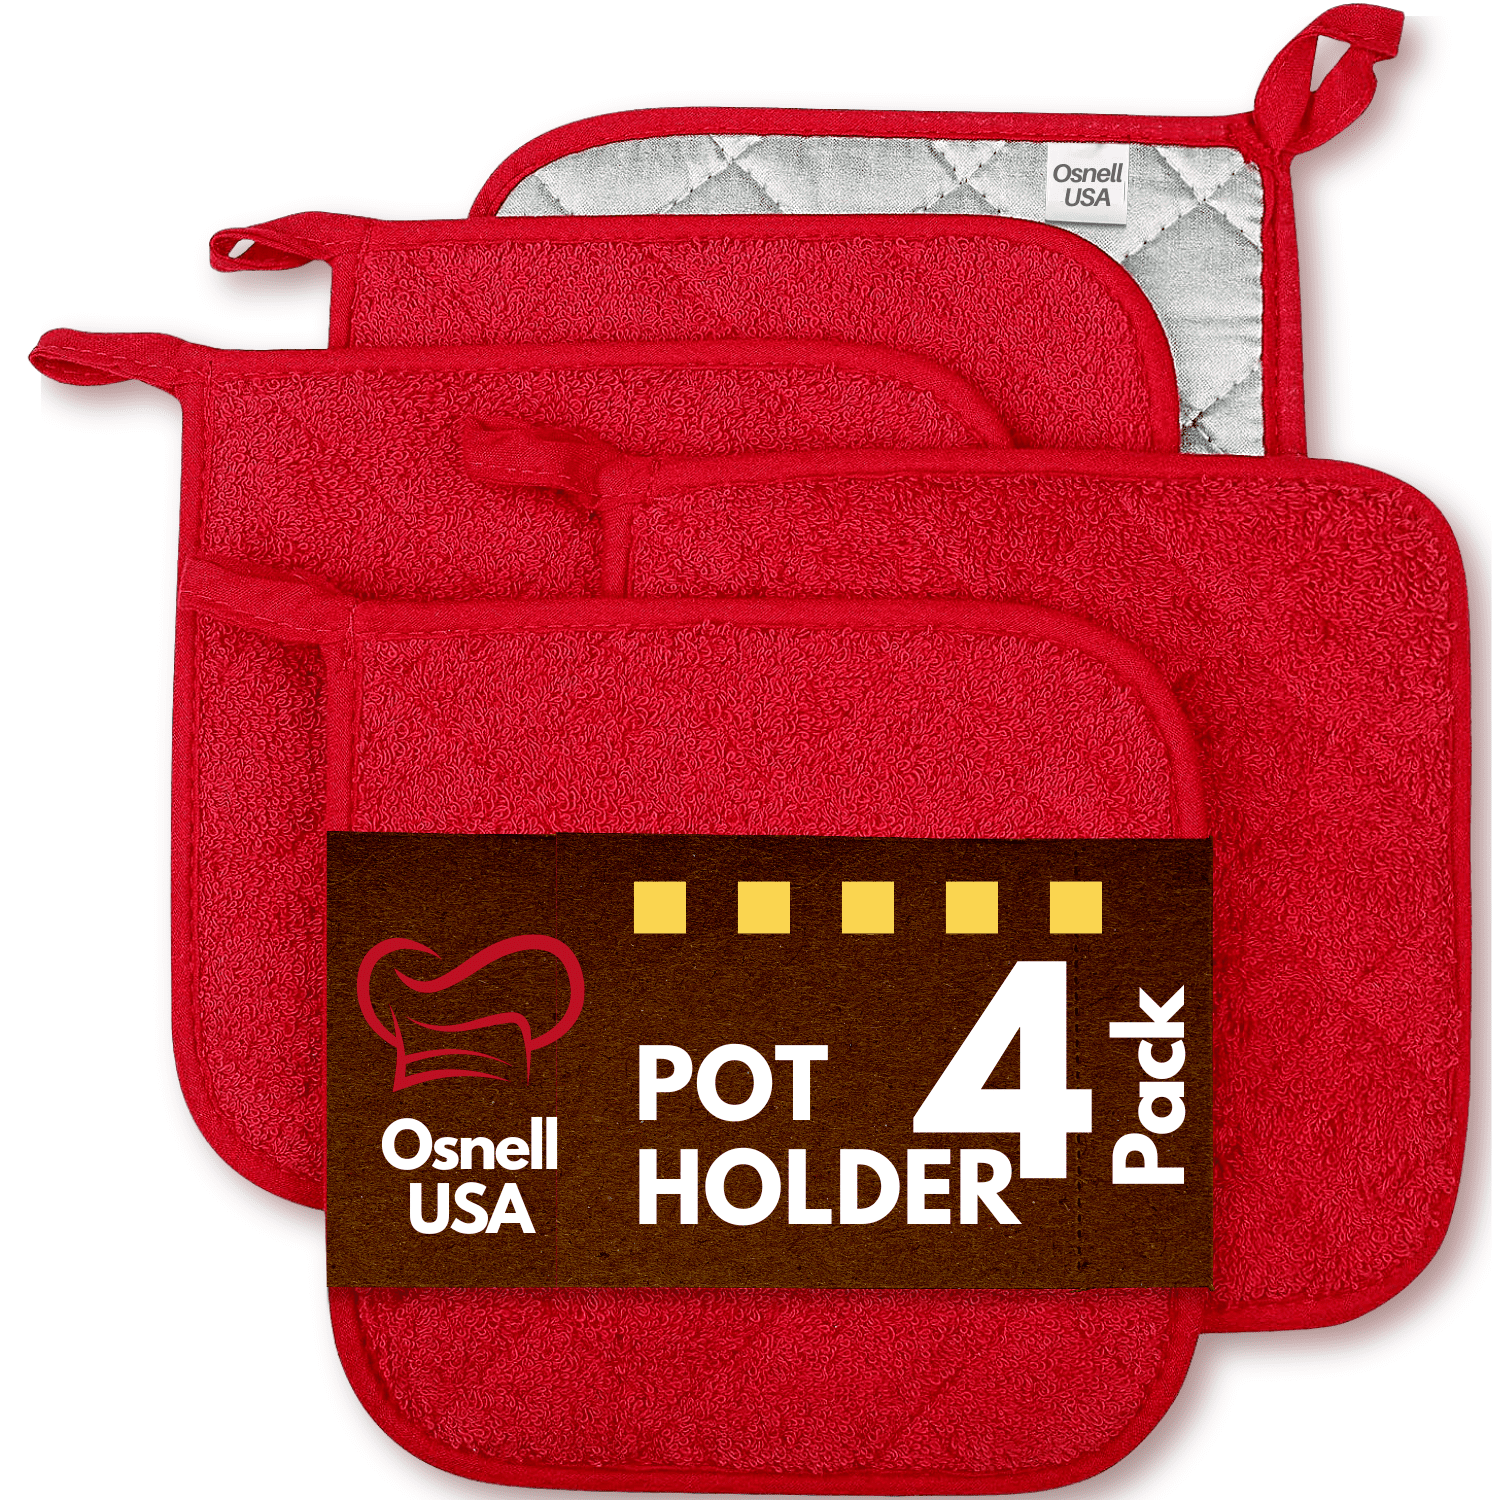 Pot Holders 7 Square Solid Color (Pack of 8) - Soft Teal - Pot